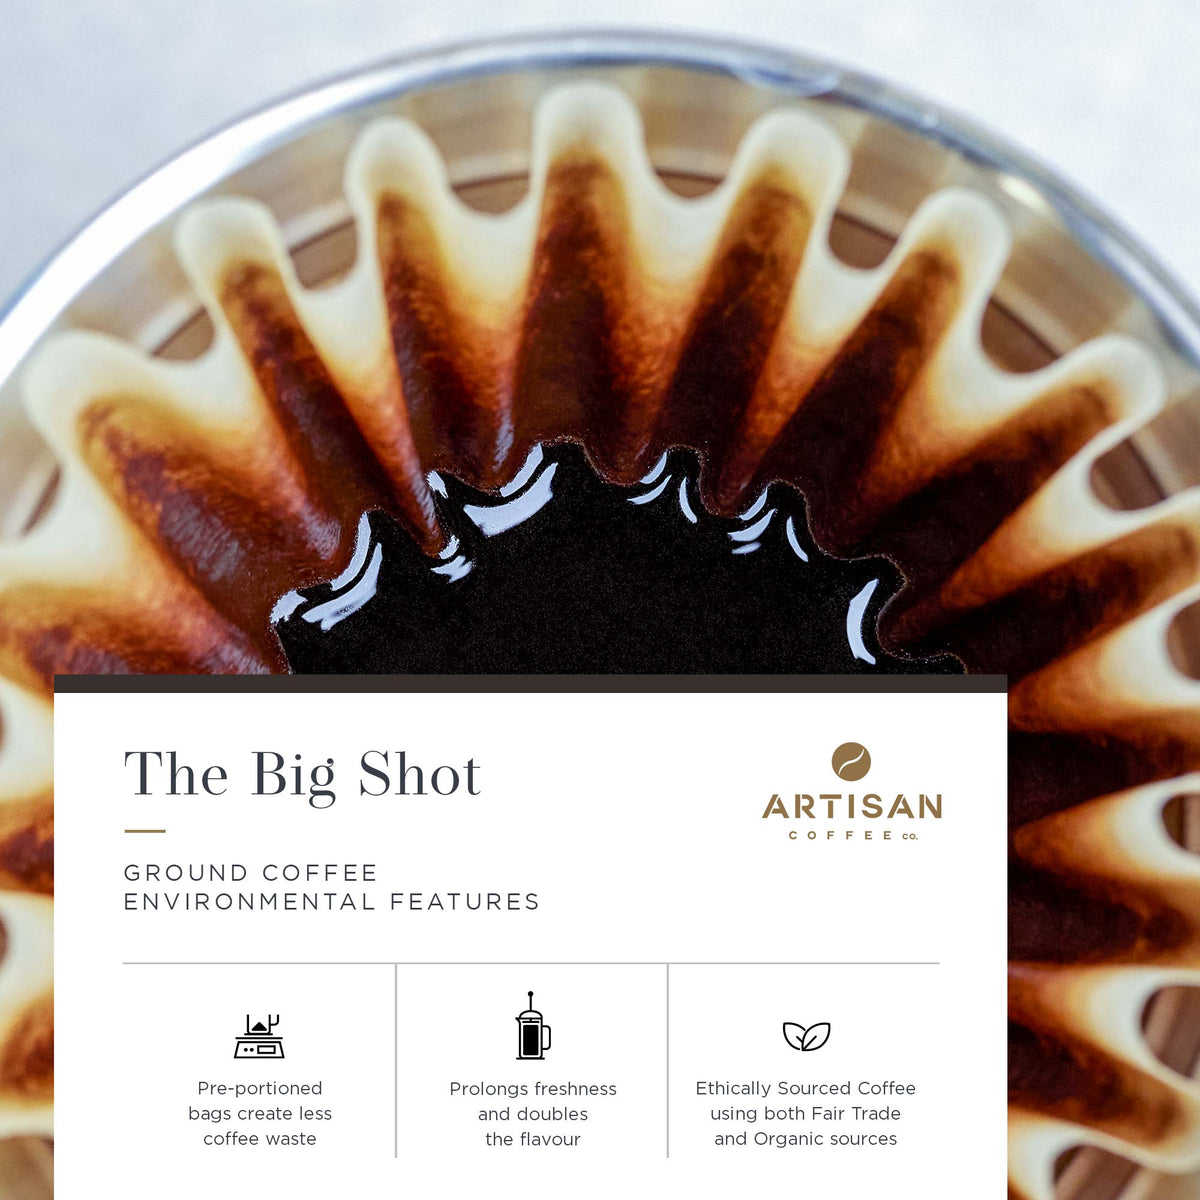 Artisan Coffee Co The Big Shot ground coffee Infographic environmental